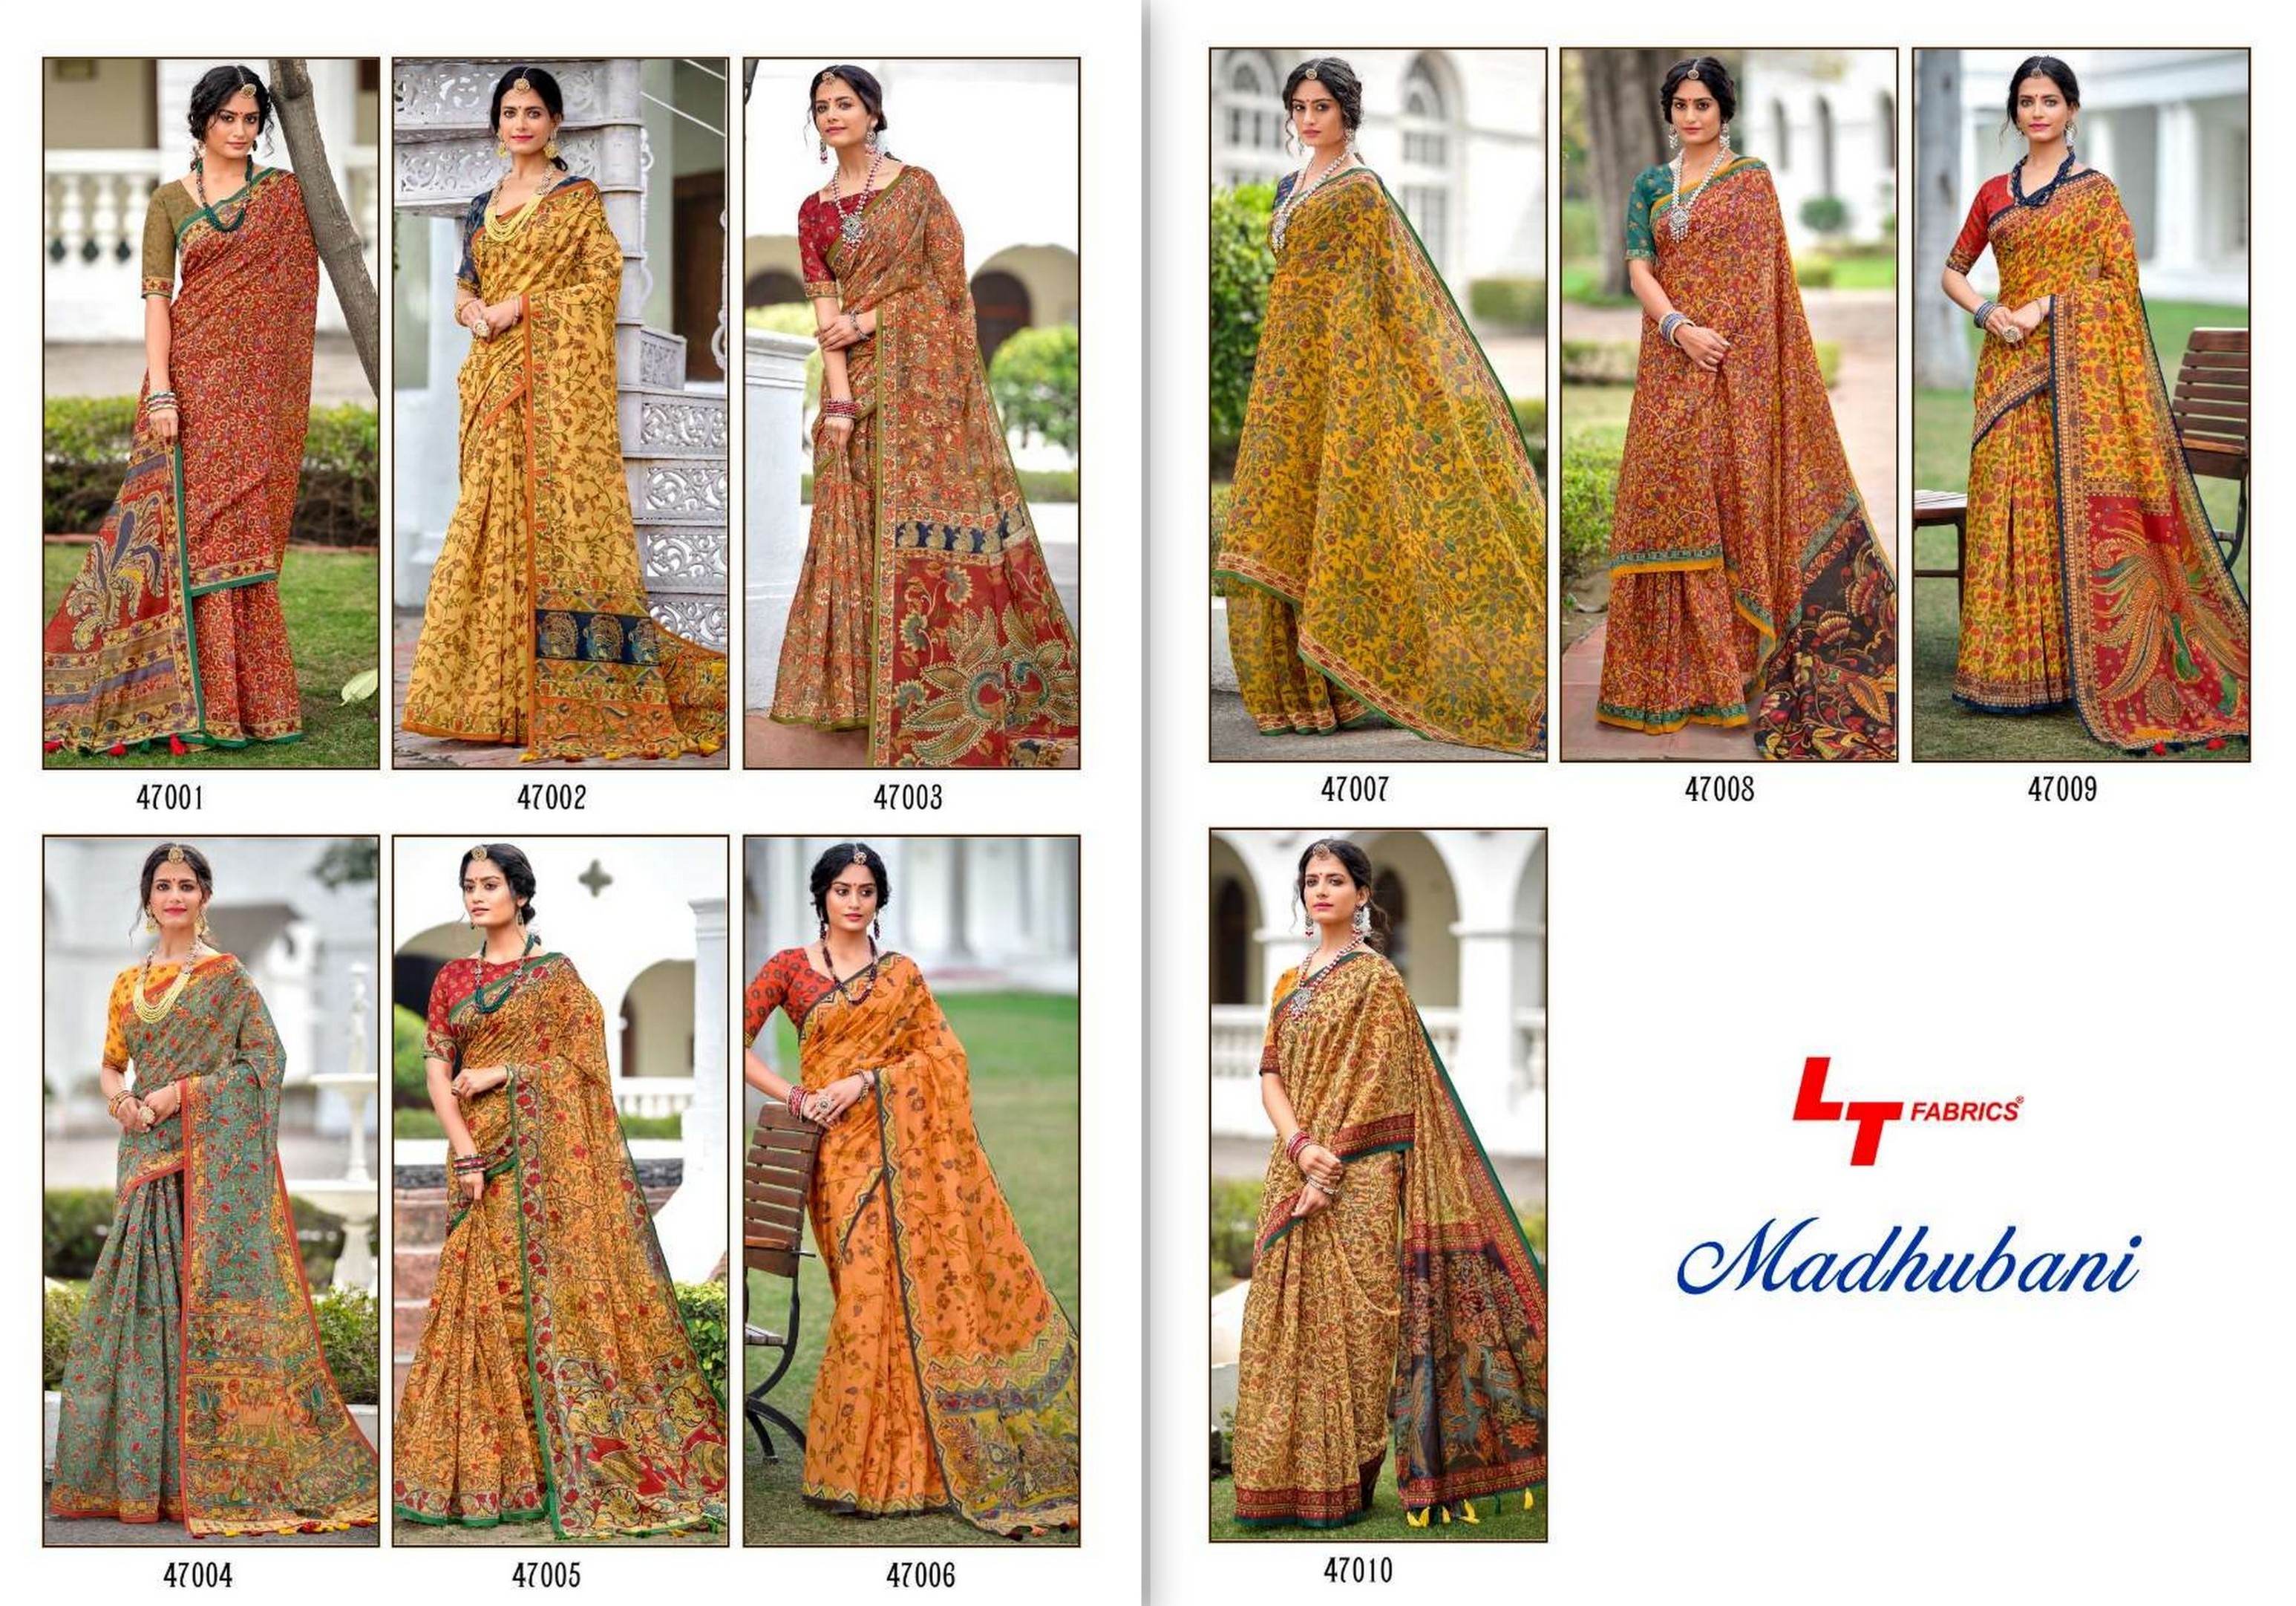 LT Fabric Madhubani 47001-47010